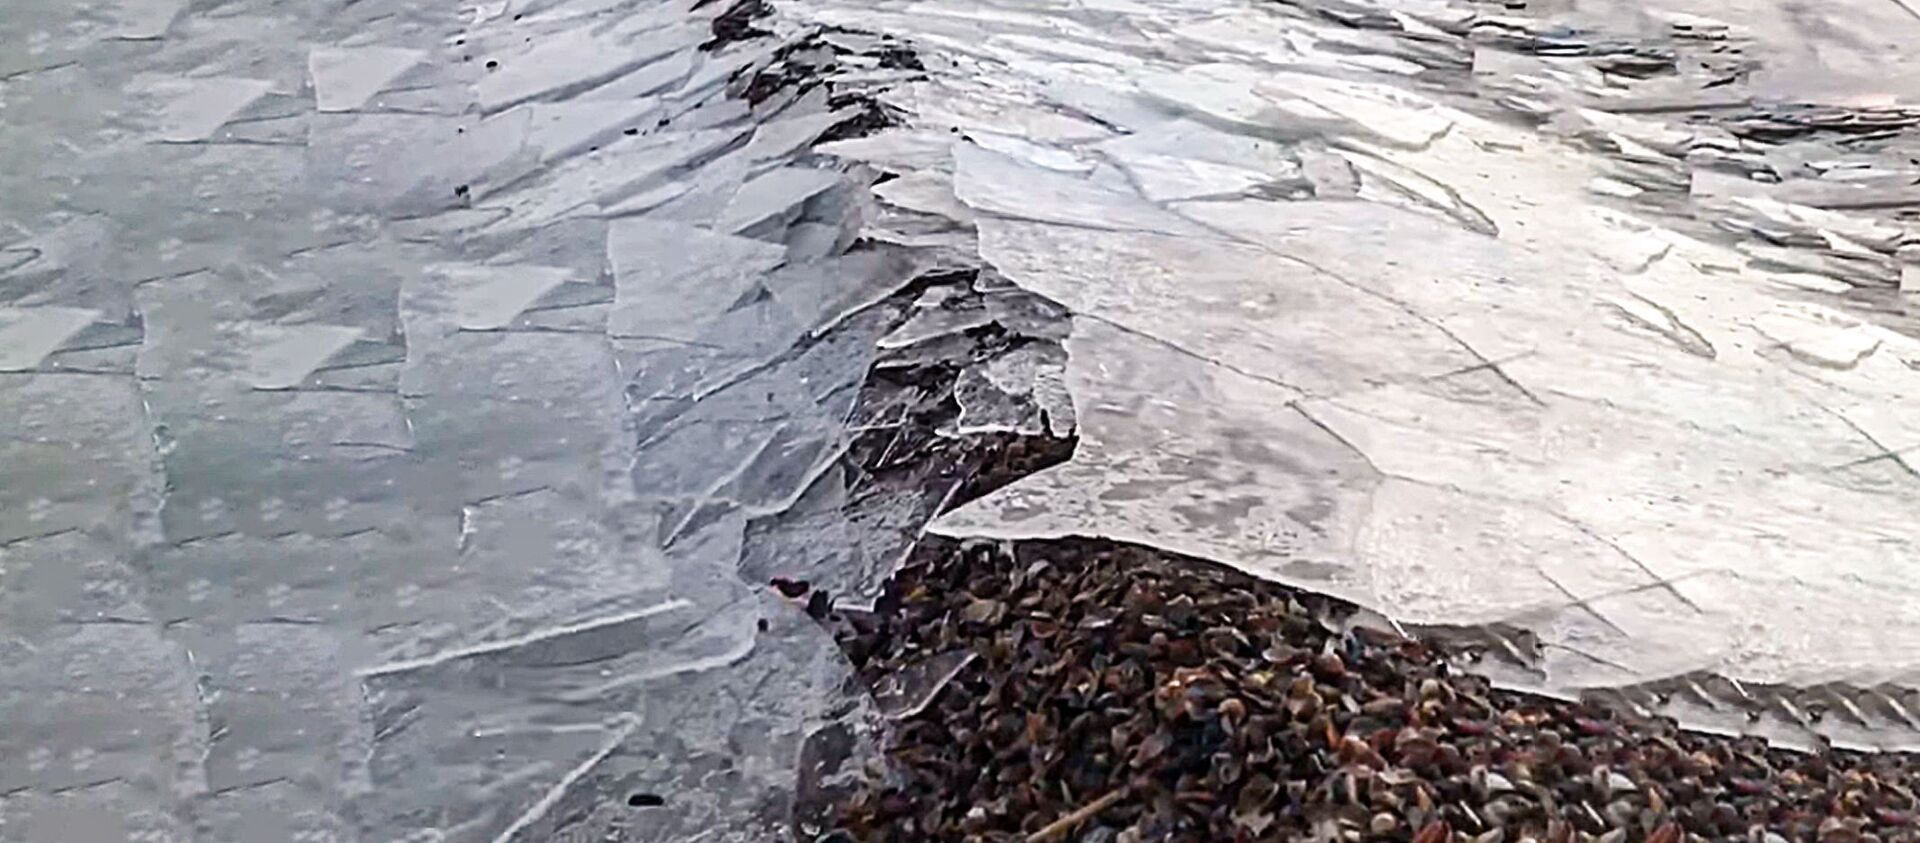 Вода в Куршском заливе выталкивает лед на сушу - Sputnik Lietuva, 1920, 12.03.2021